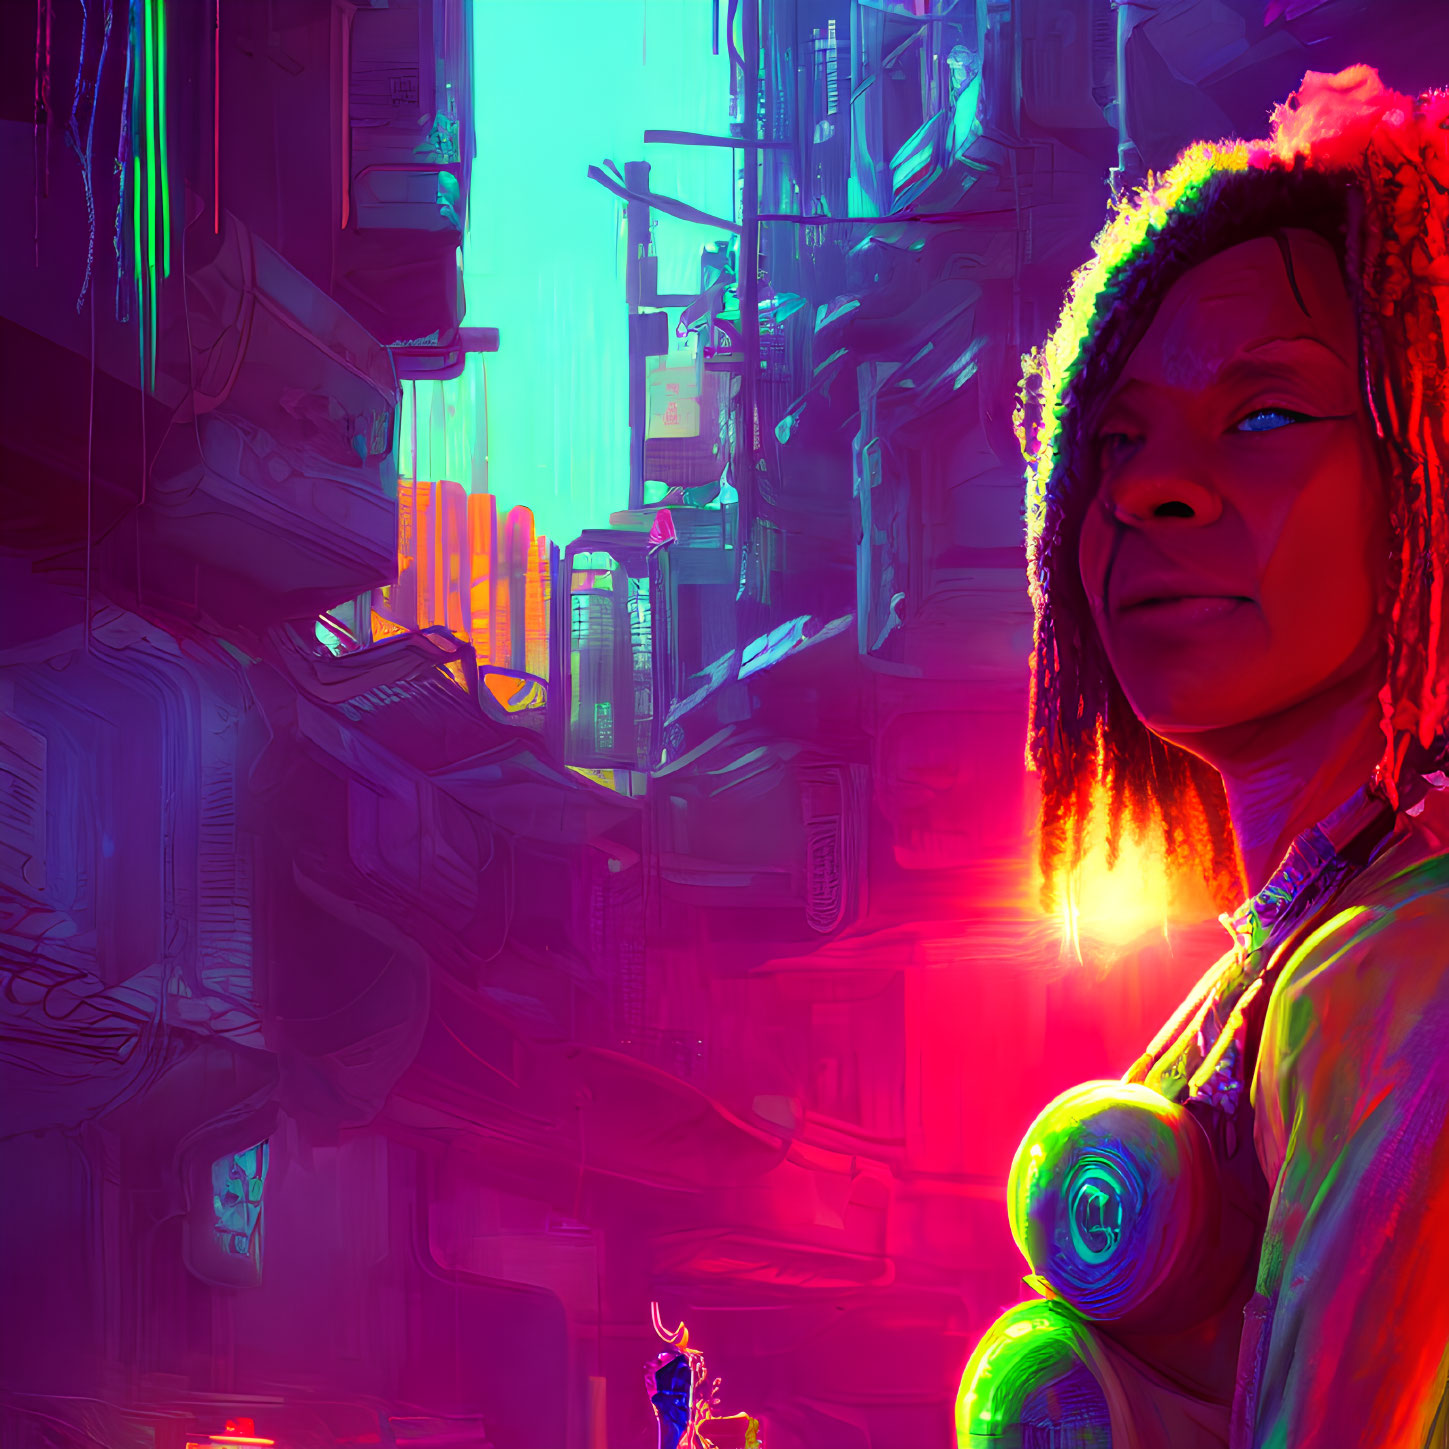 Colorful haired woman in vibrant futuristic cityscape